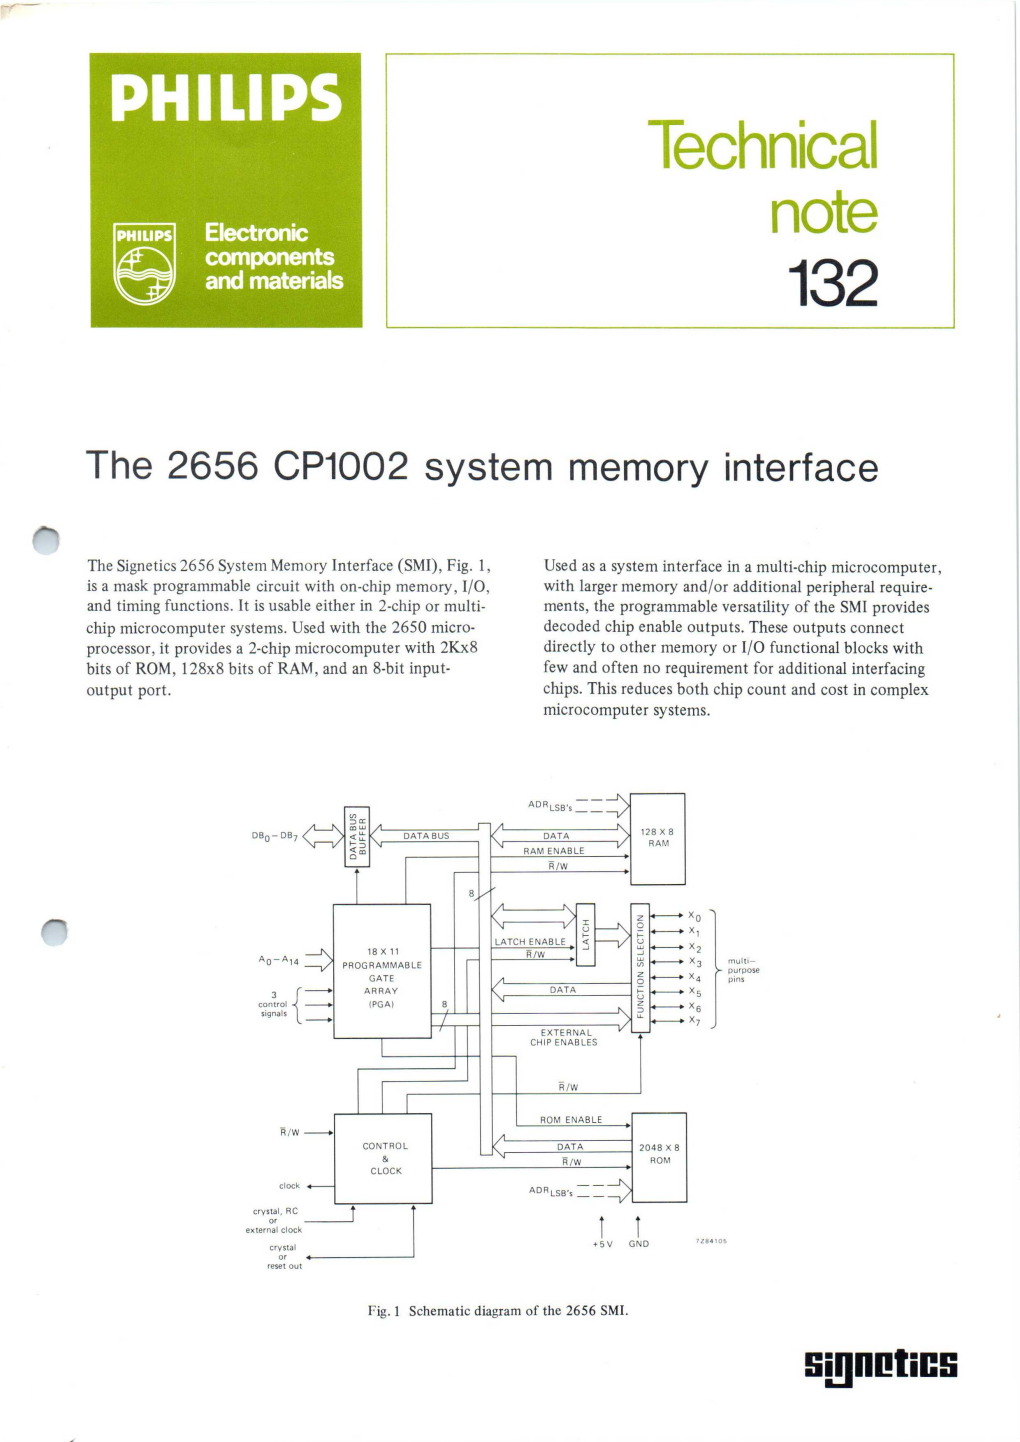 2650 Micoprocessor